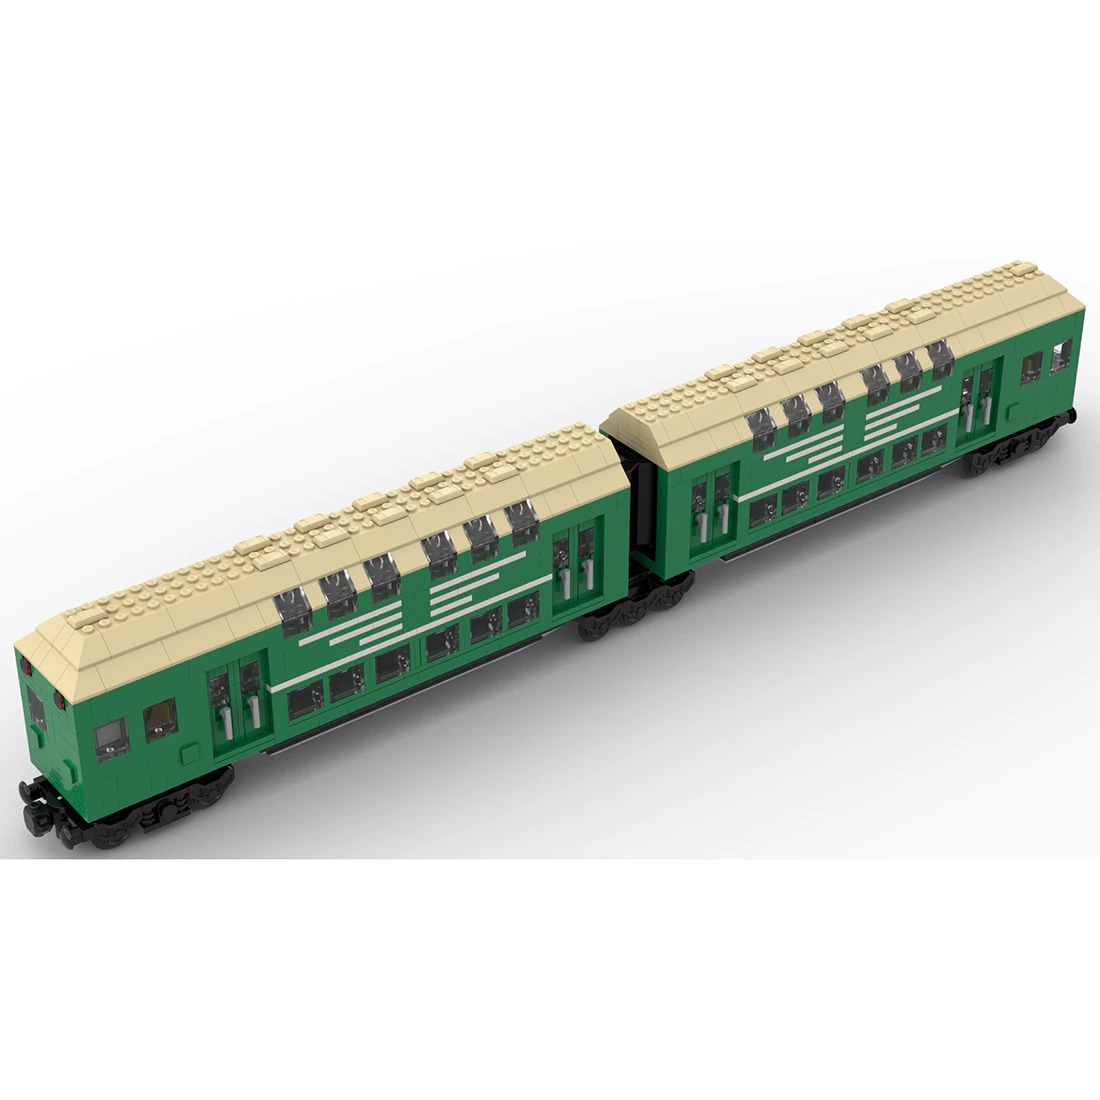 authorized moc 109281 7 axle train carri main 2 2 - KAZI Block